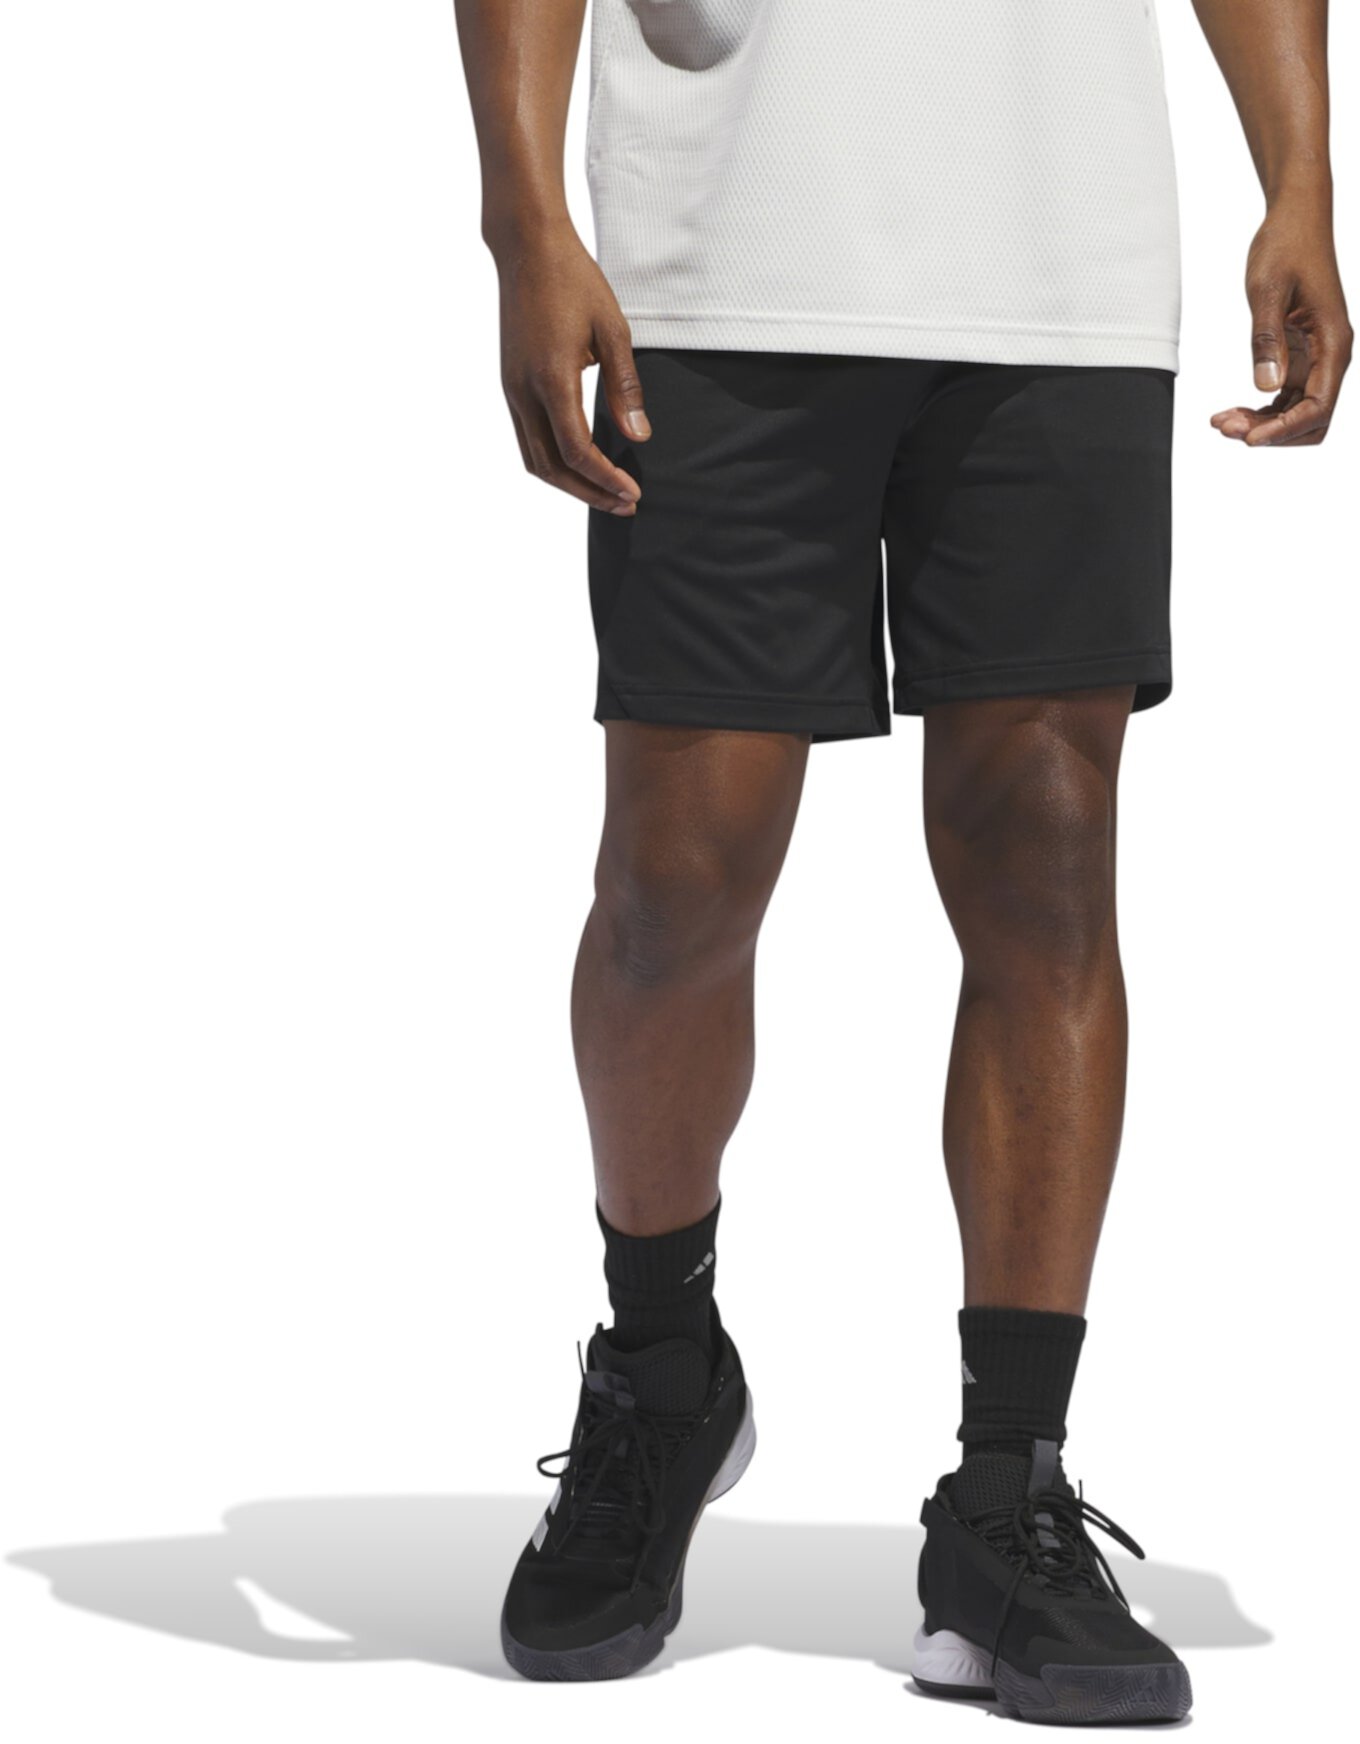 Баскетбольные шорты Adidas Legends 3-Stripes 11 на мужчин Adidas